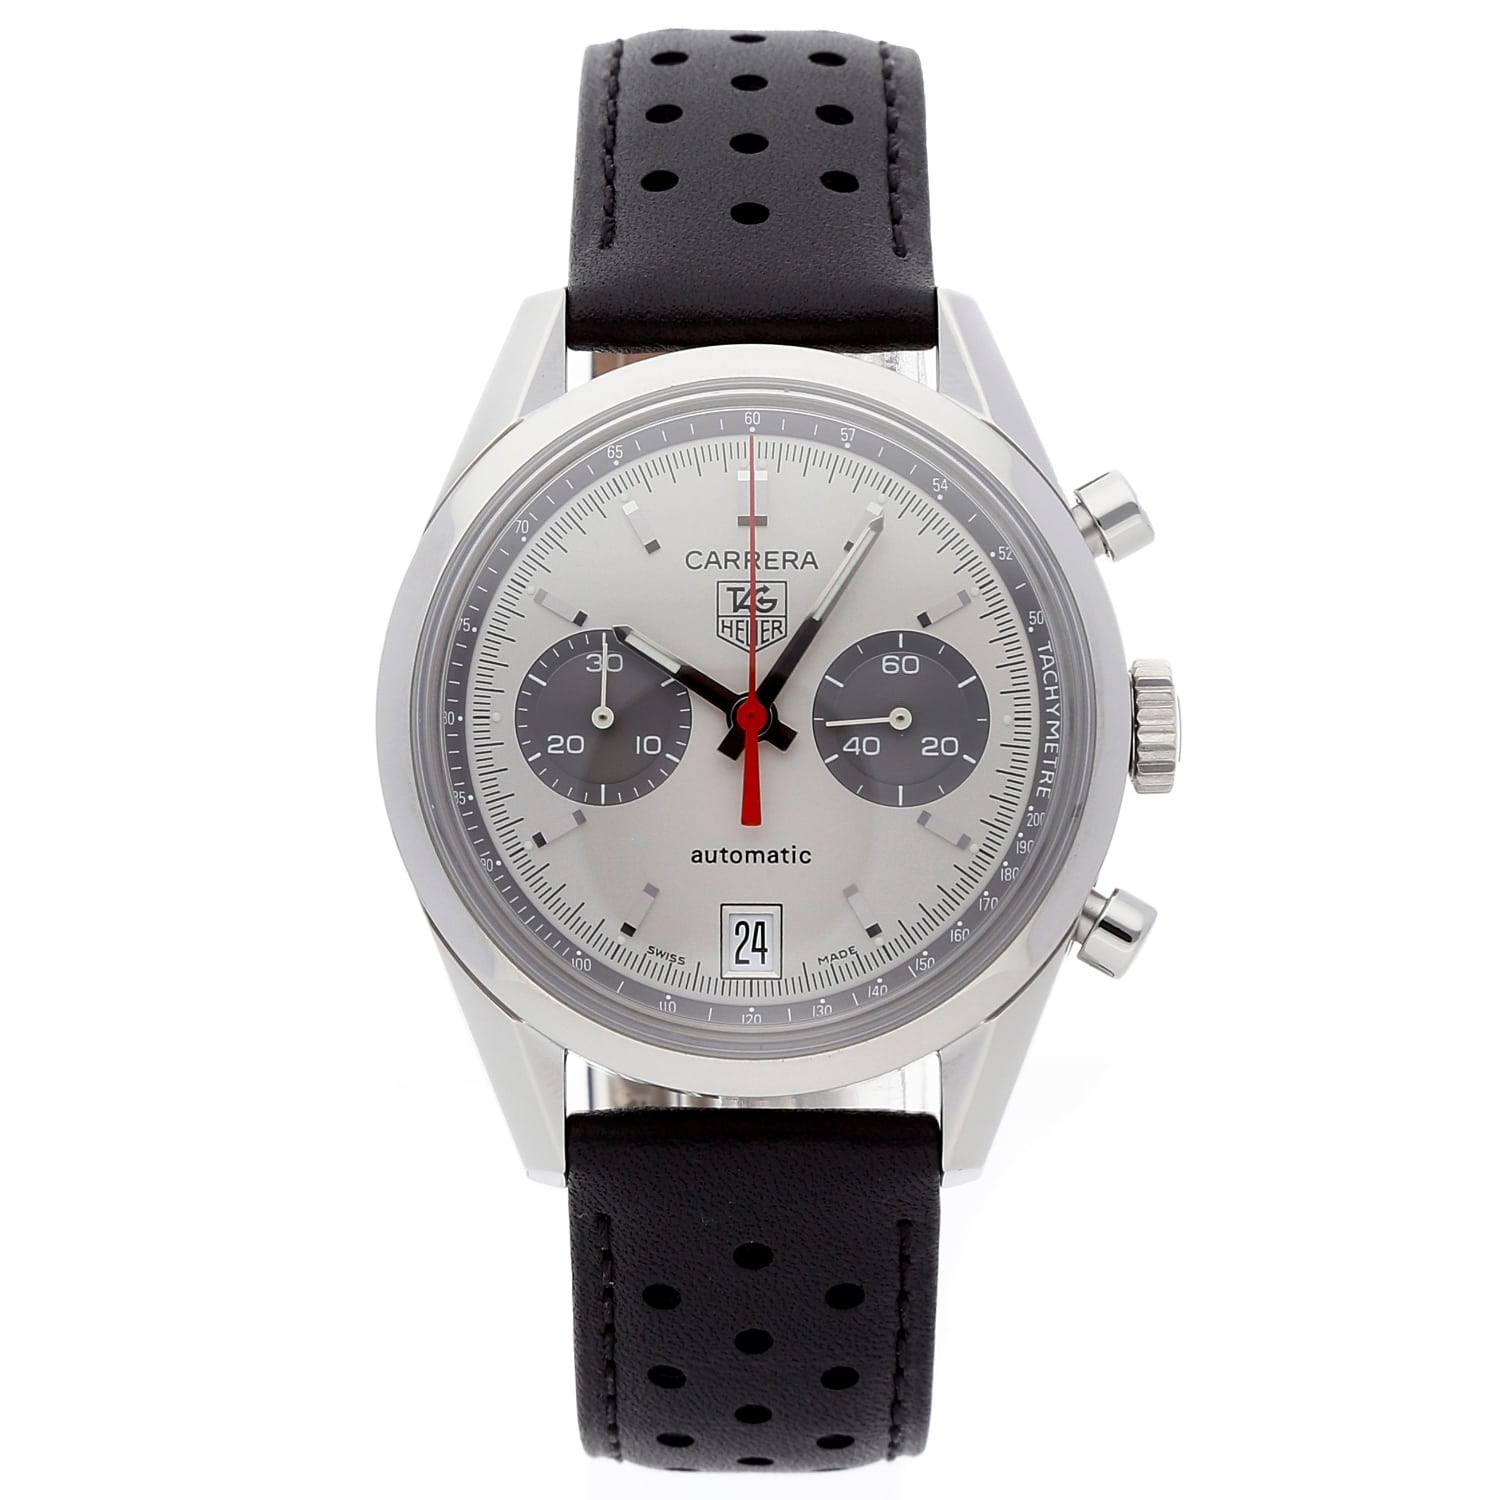 Tag Heuer Carrera via WatchBox timepieces